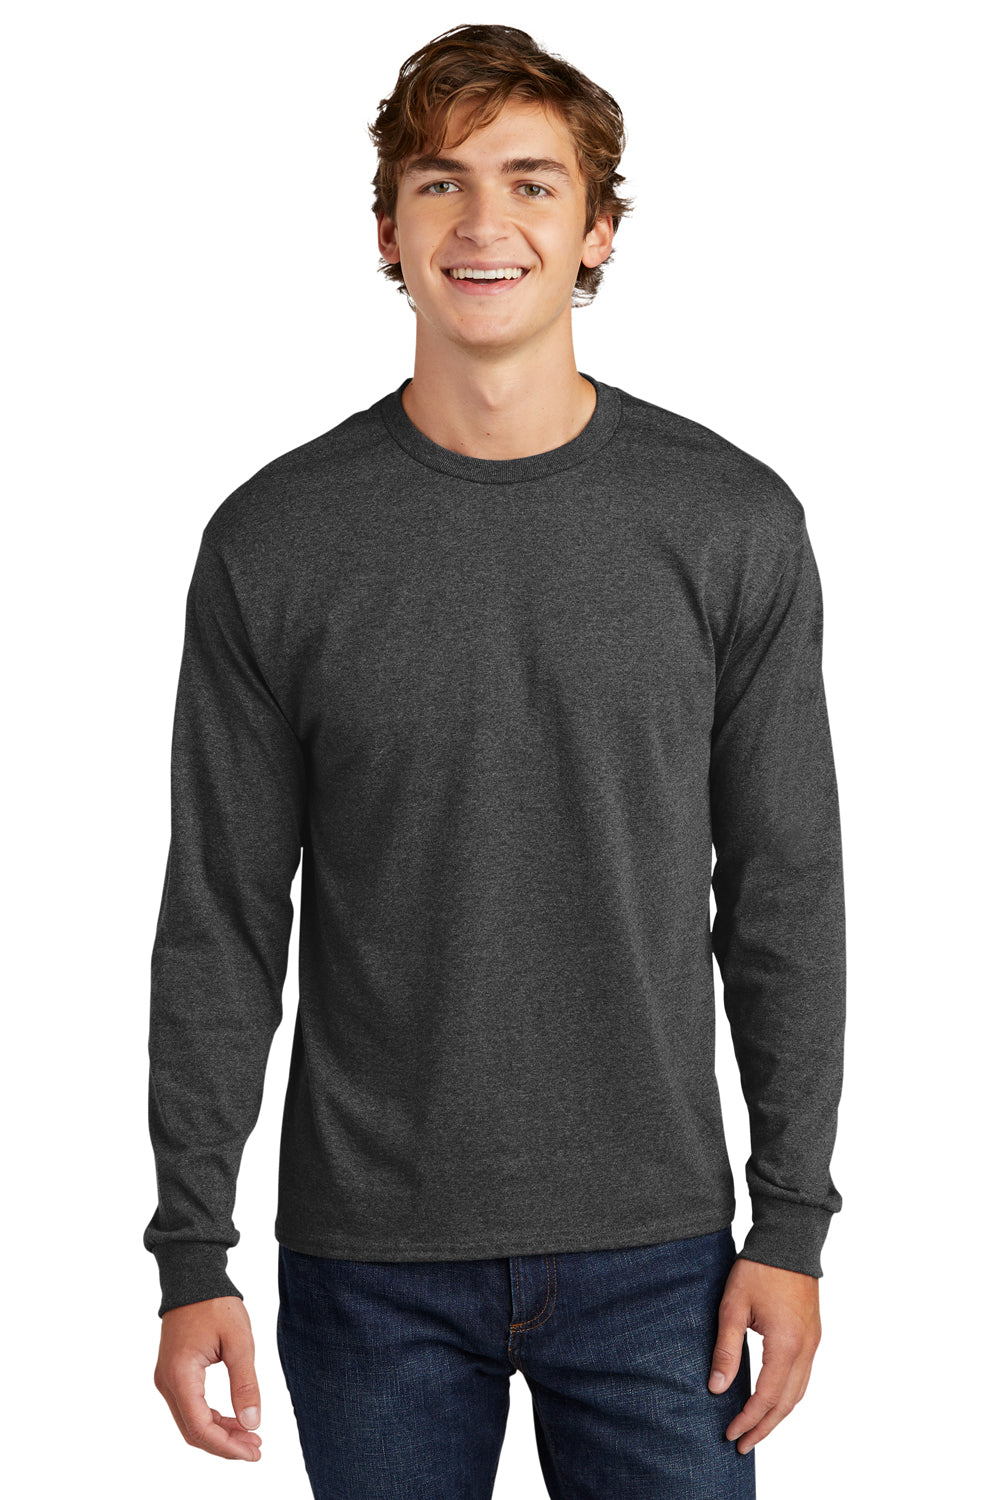 Hanes 5286 Mens ComfortSoft Long Sleeve Crewneck T-Shirt Heather Charcoal Grey Front